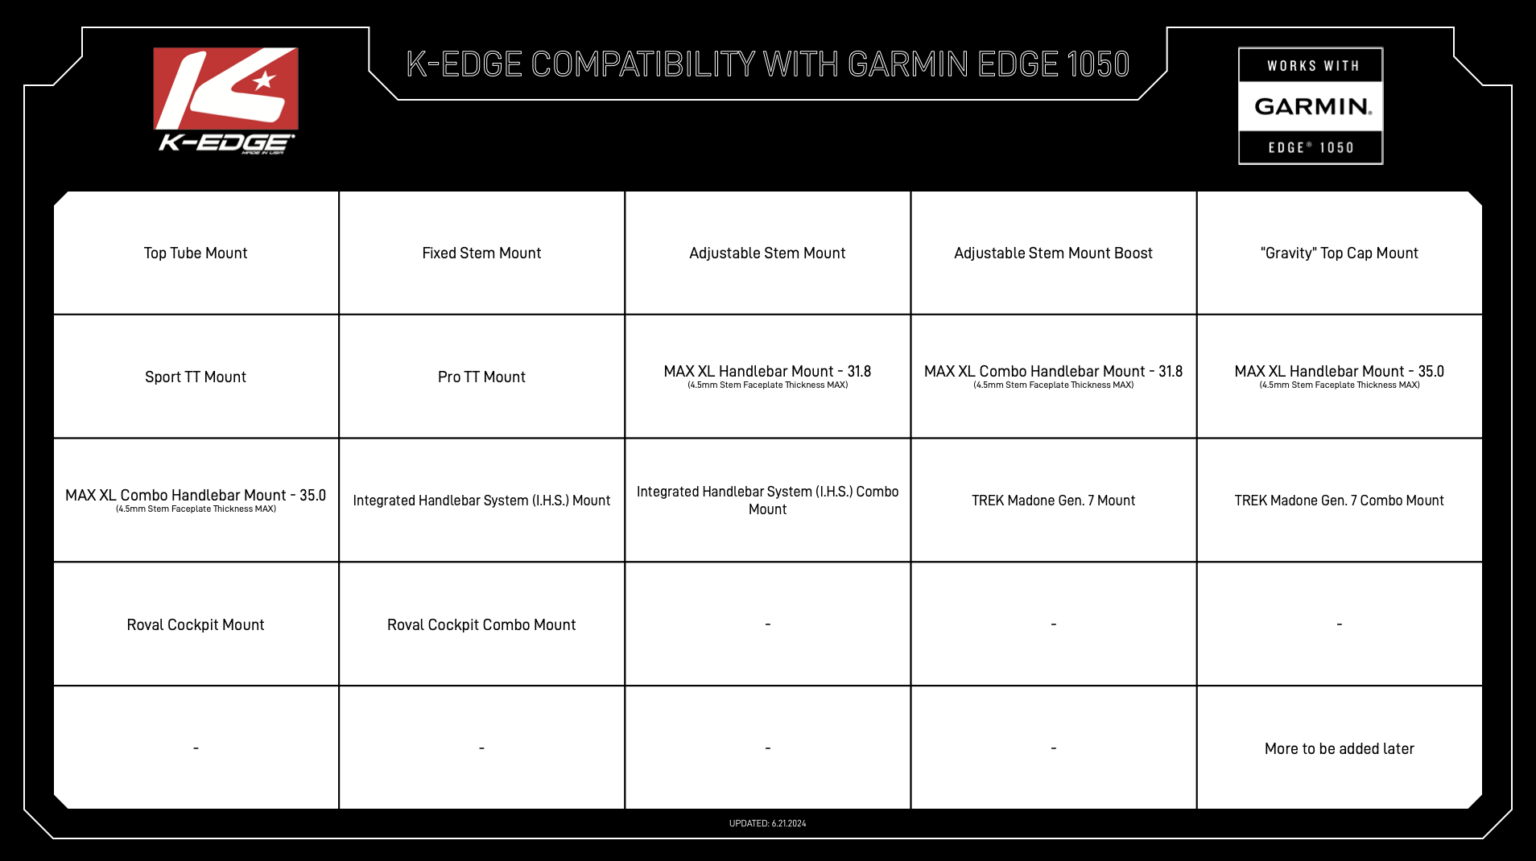 K-EDGE works with Garmin 1050 certified computer mounts